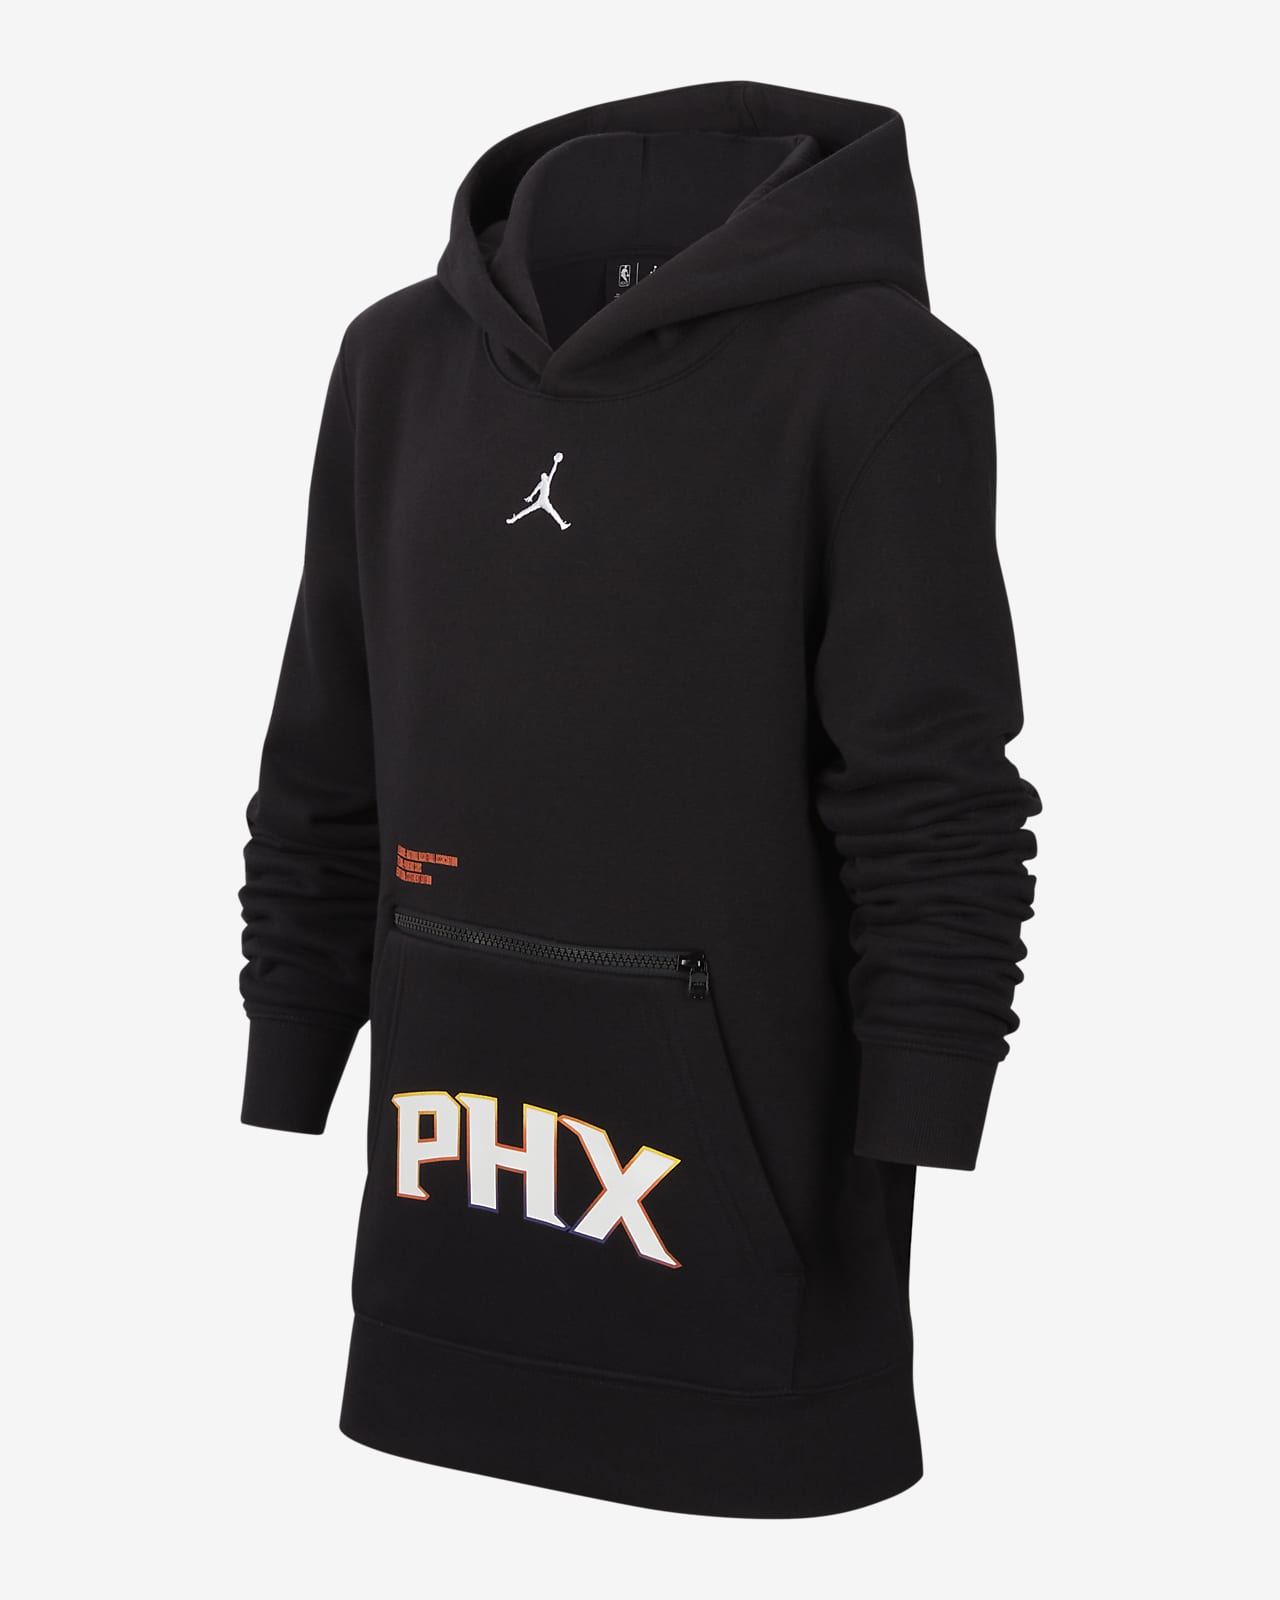 Phoenix Suns MONOCHROME XL-LOGO Grey-Black Fitted Hat